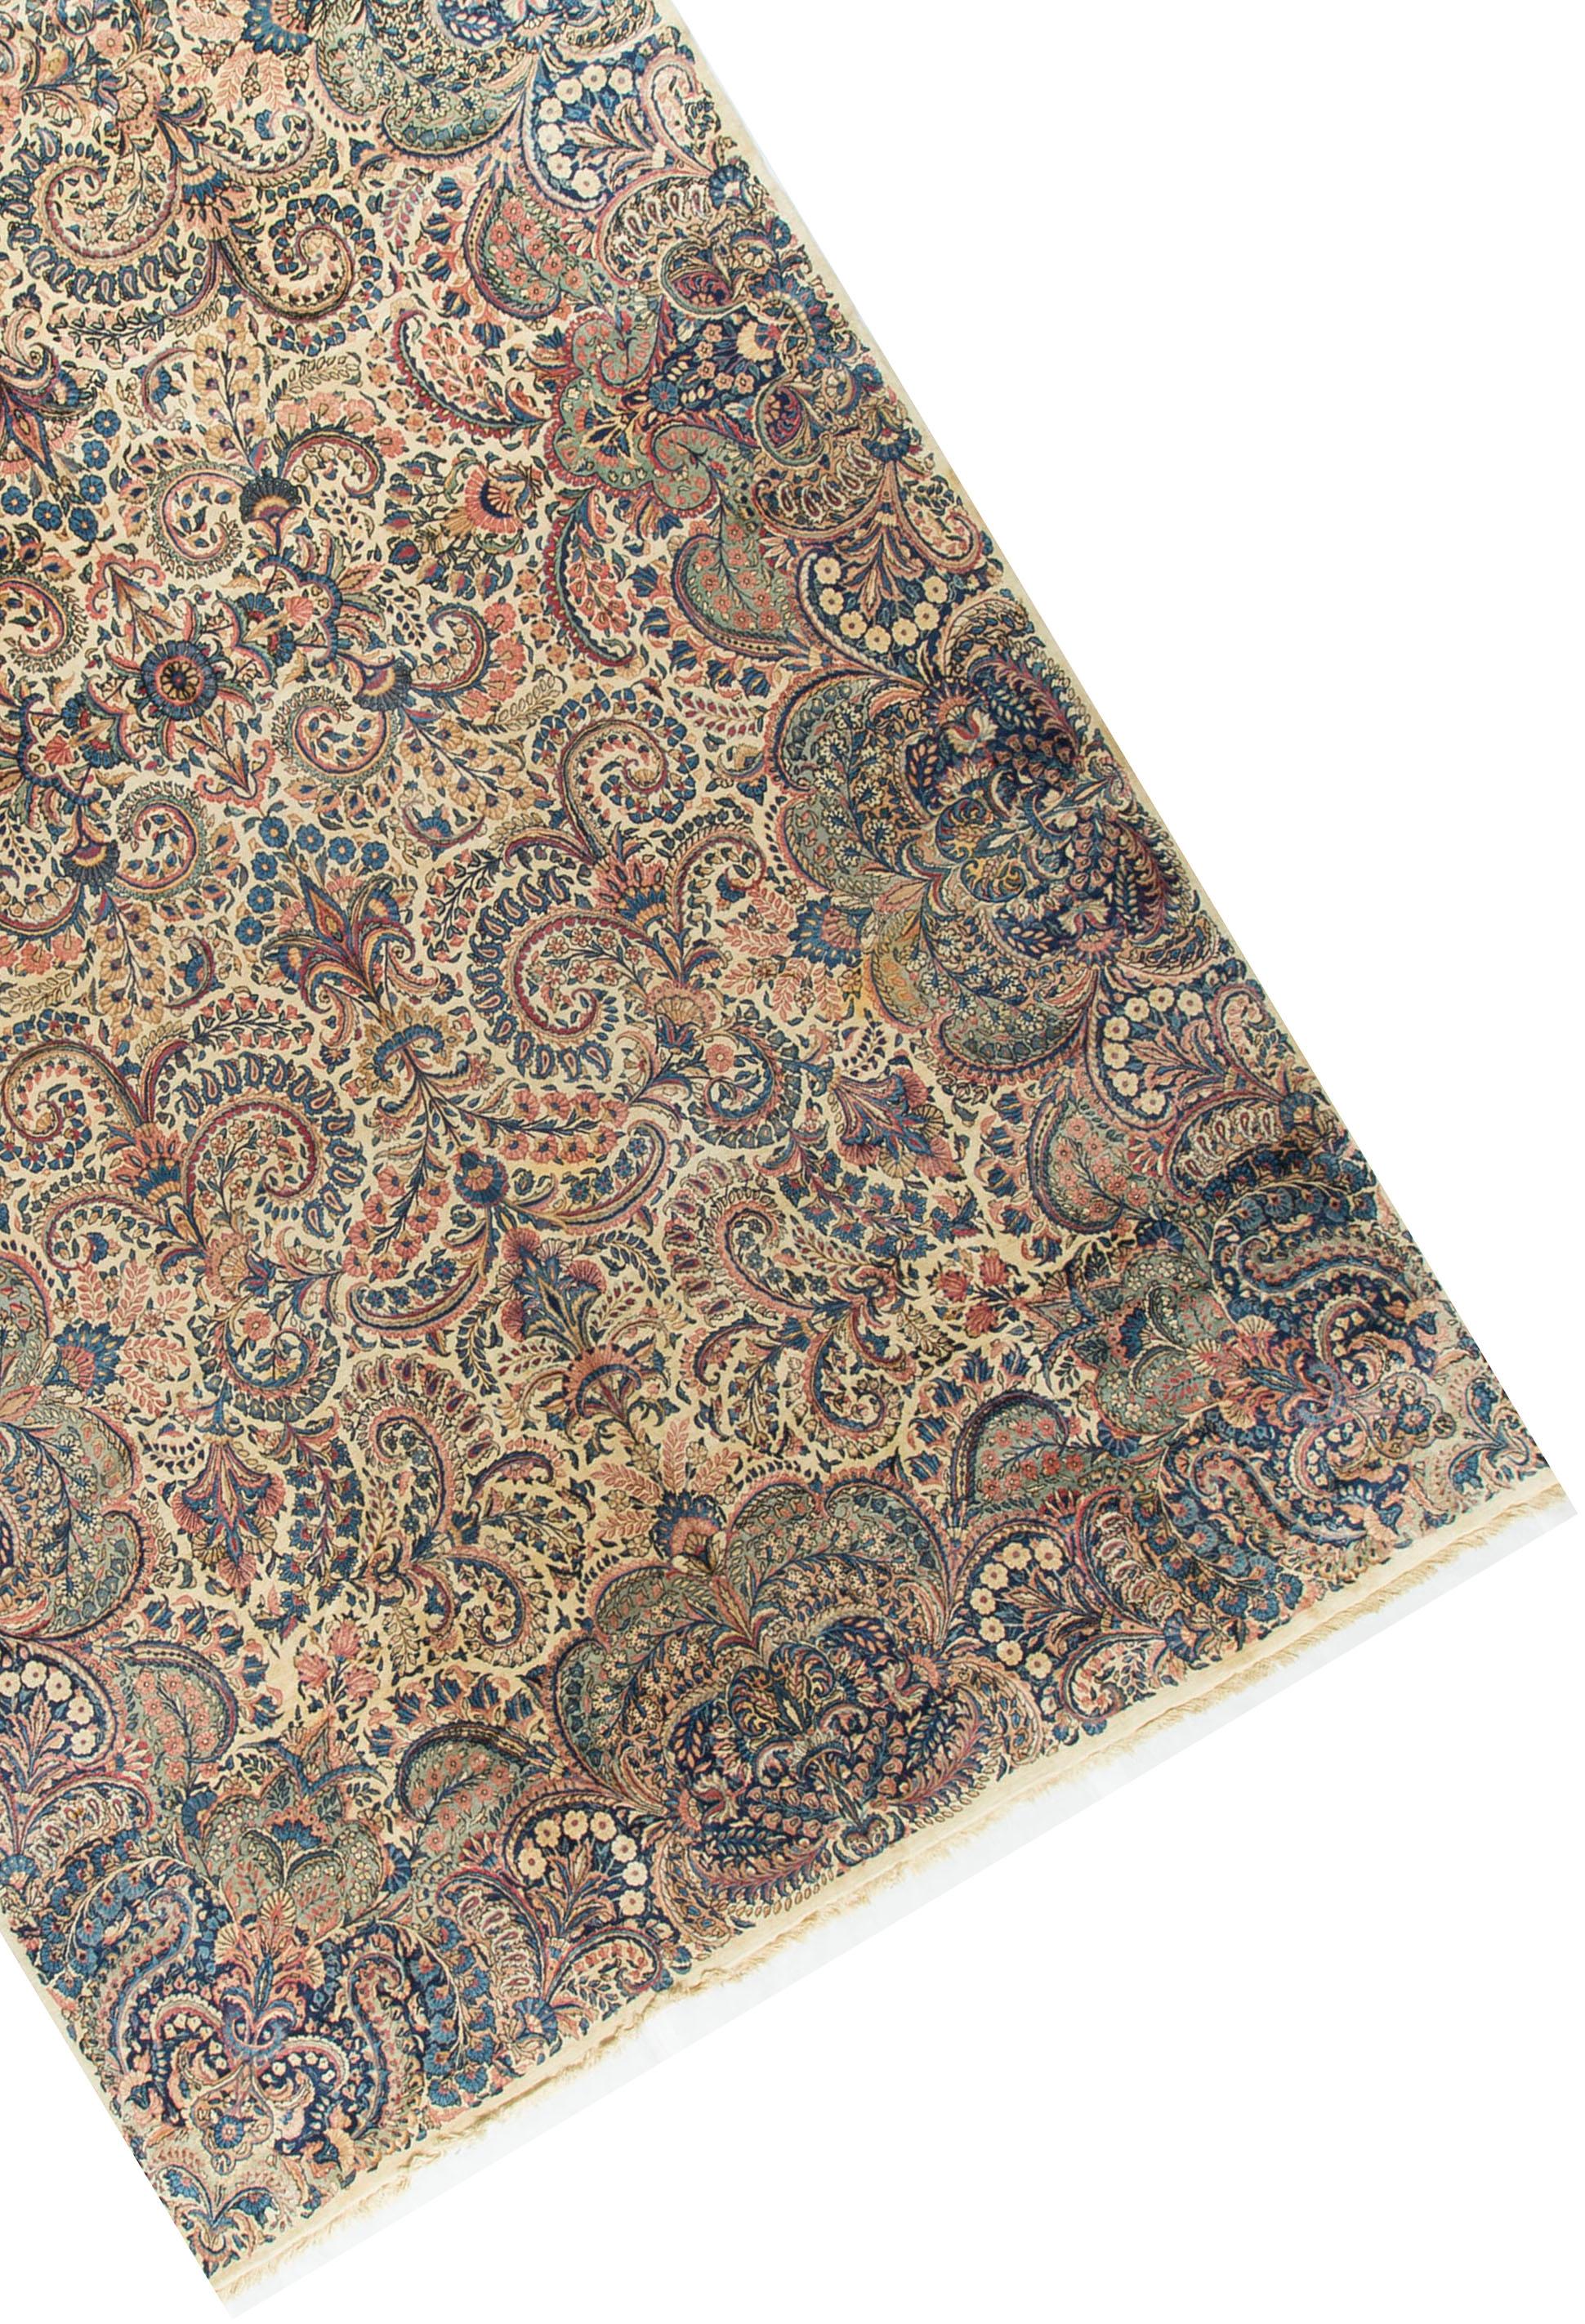 Hand-Woven Oversize Persian Kerman Rug Carpet, circa 1930 11' x 19' For Sale